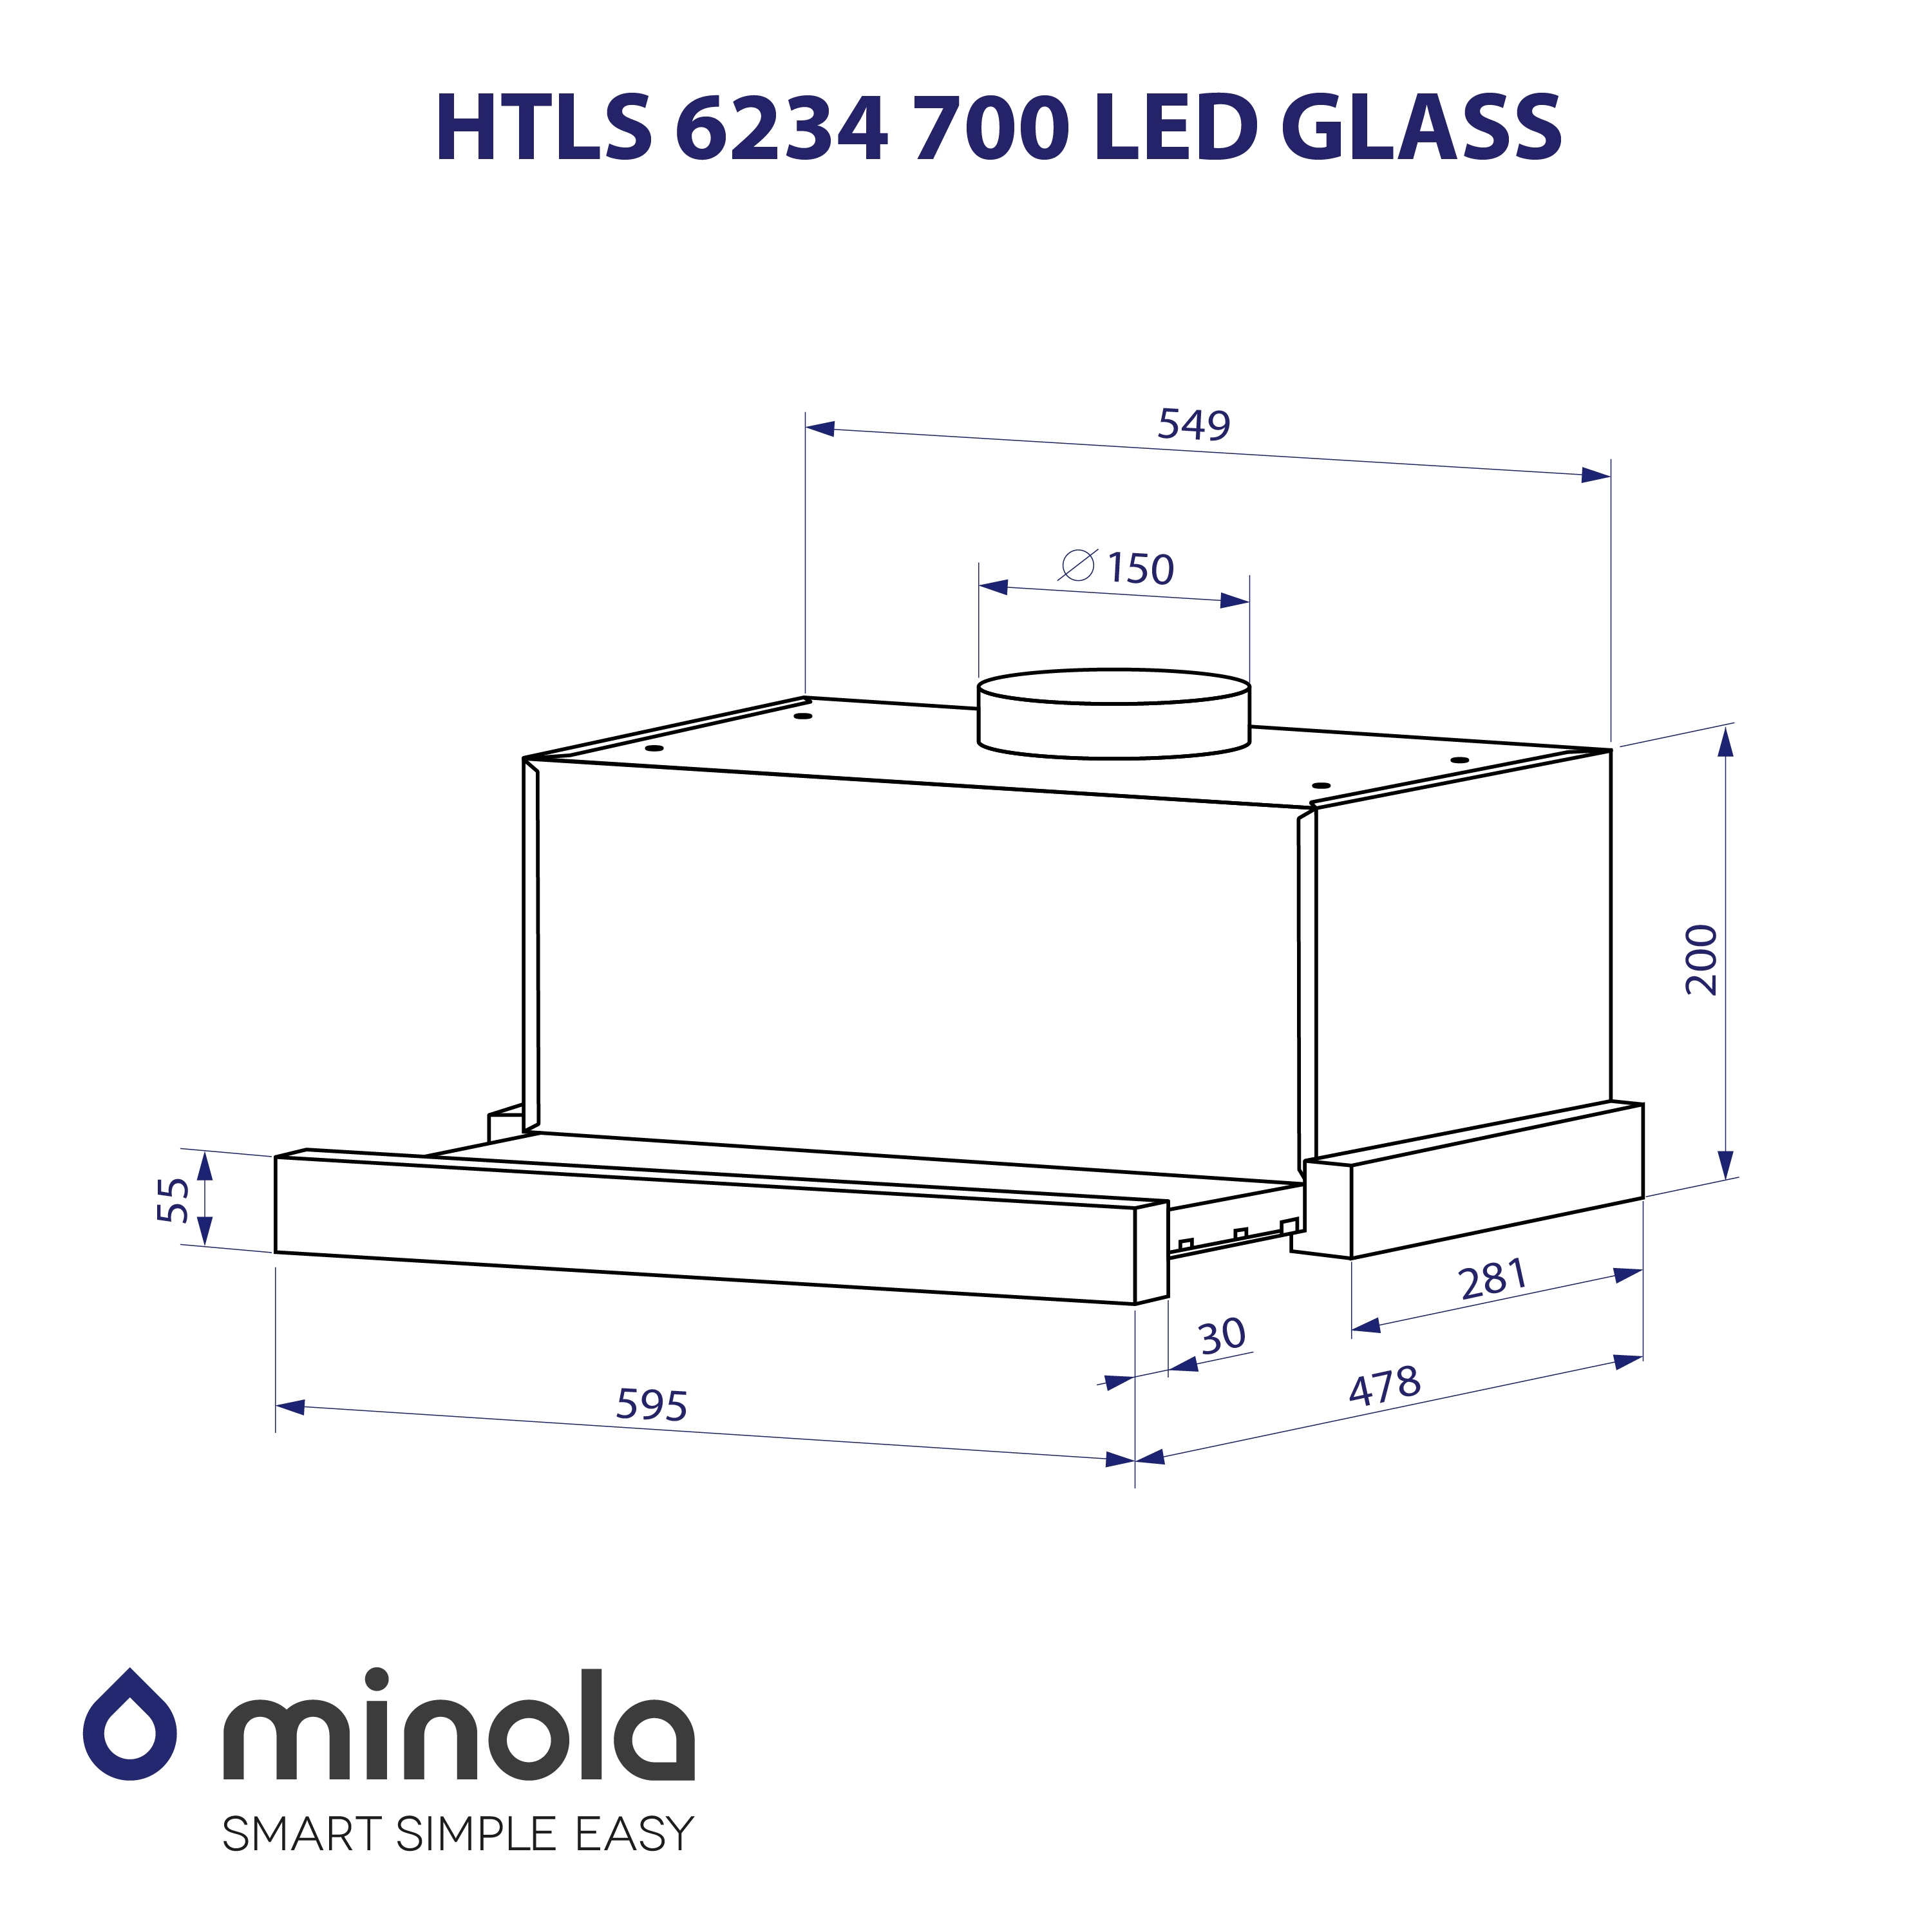 Minola HTLS 6234 BL 700 LED GLASS Габаритные размеры